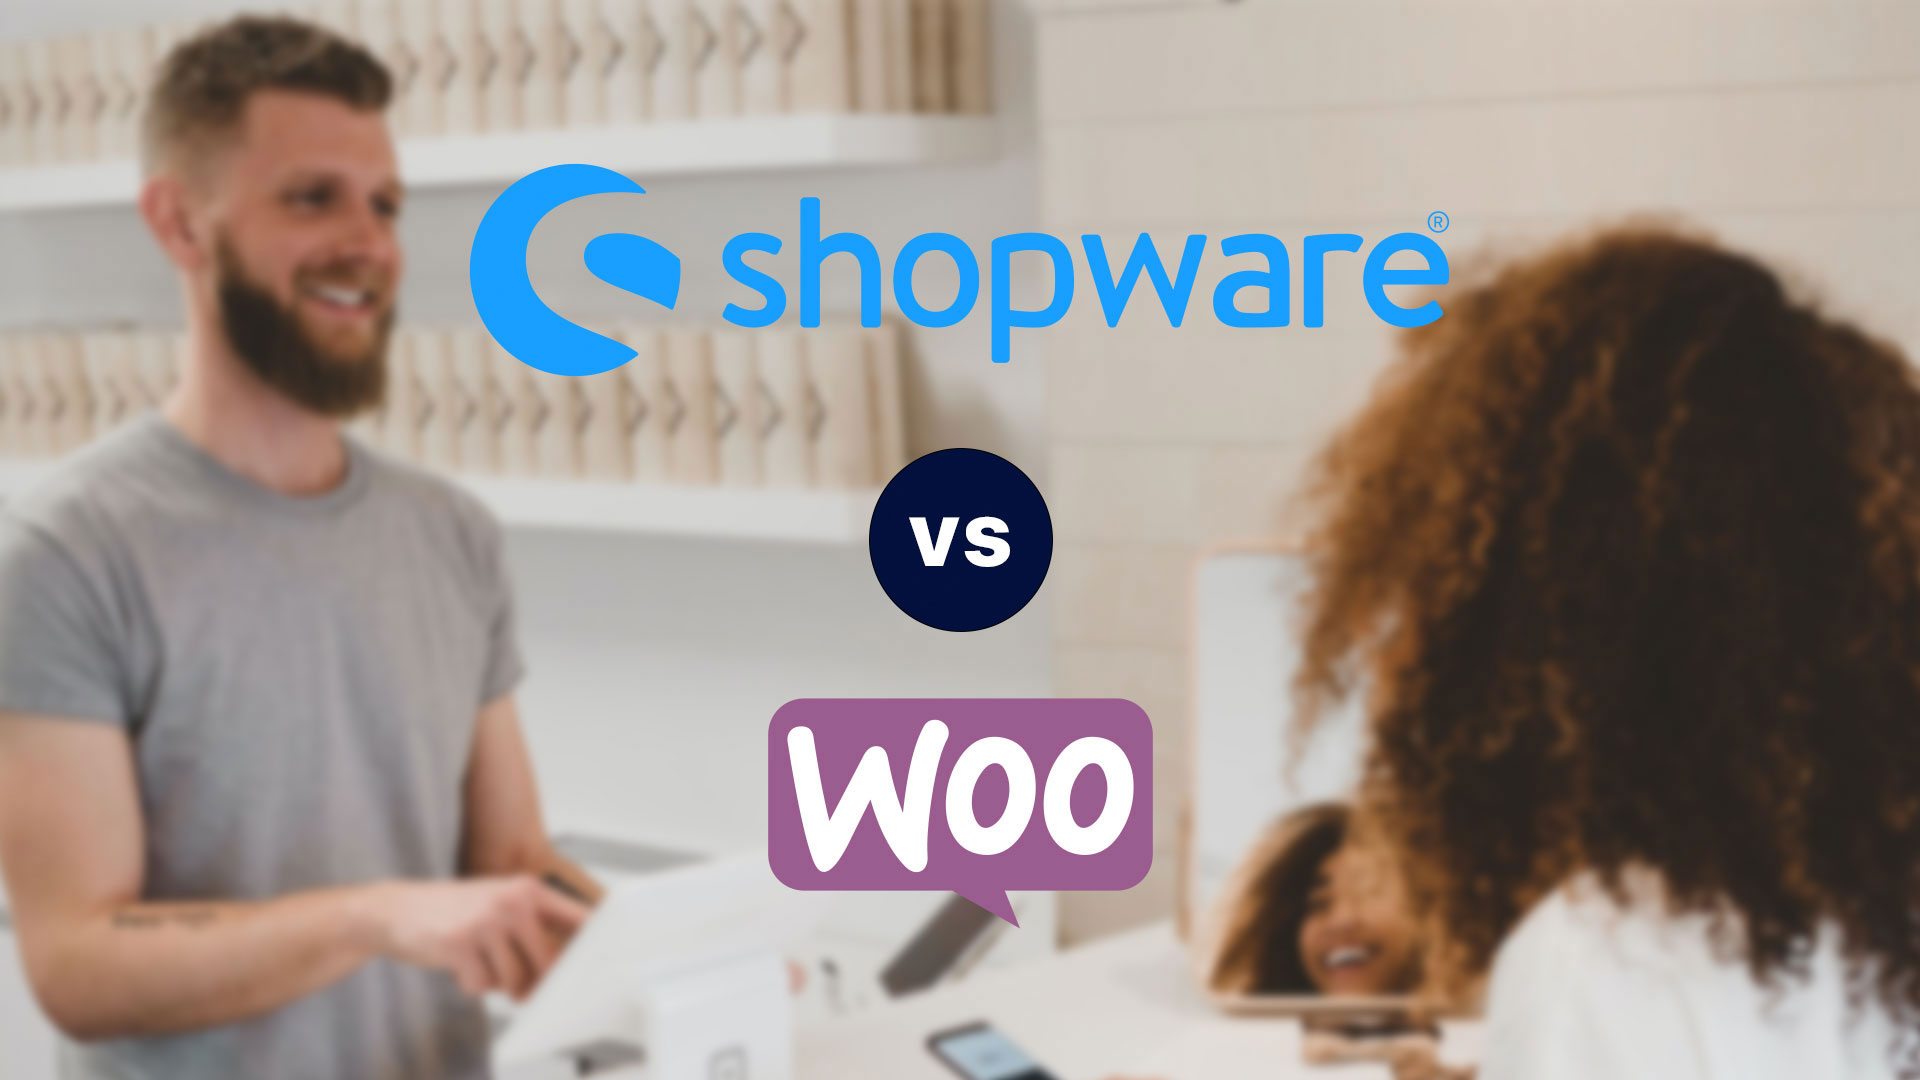 Shopware vs WooCommerce